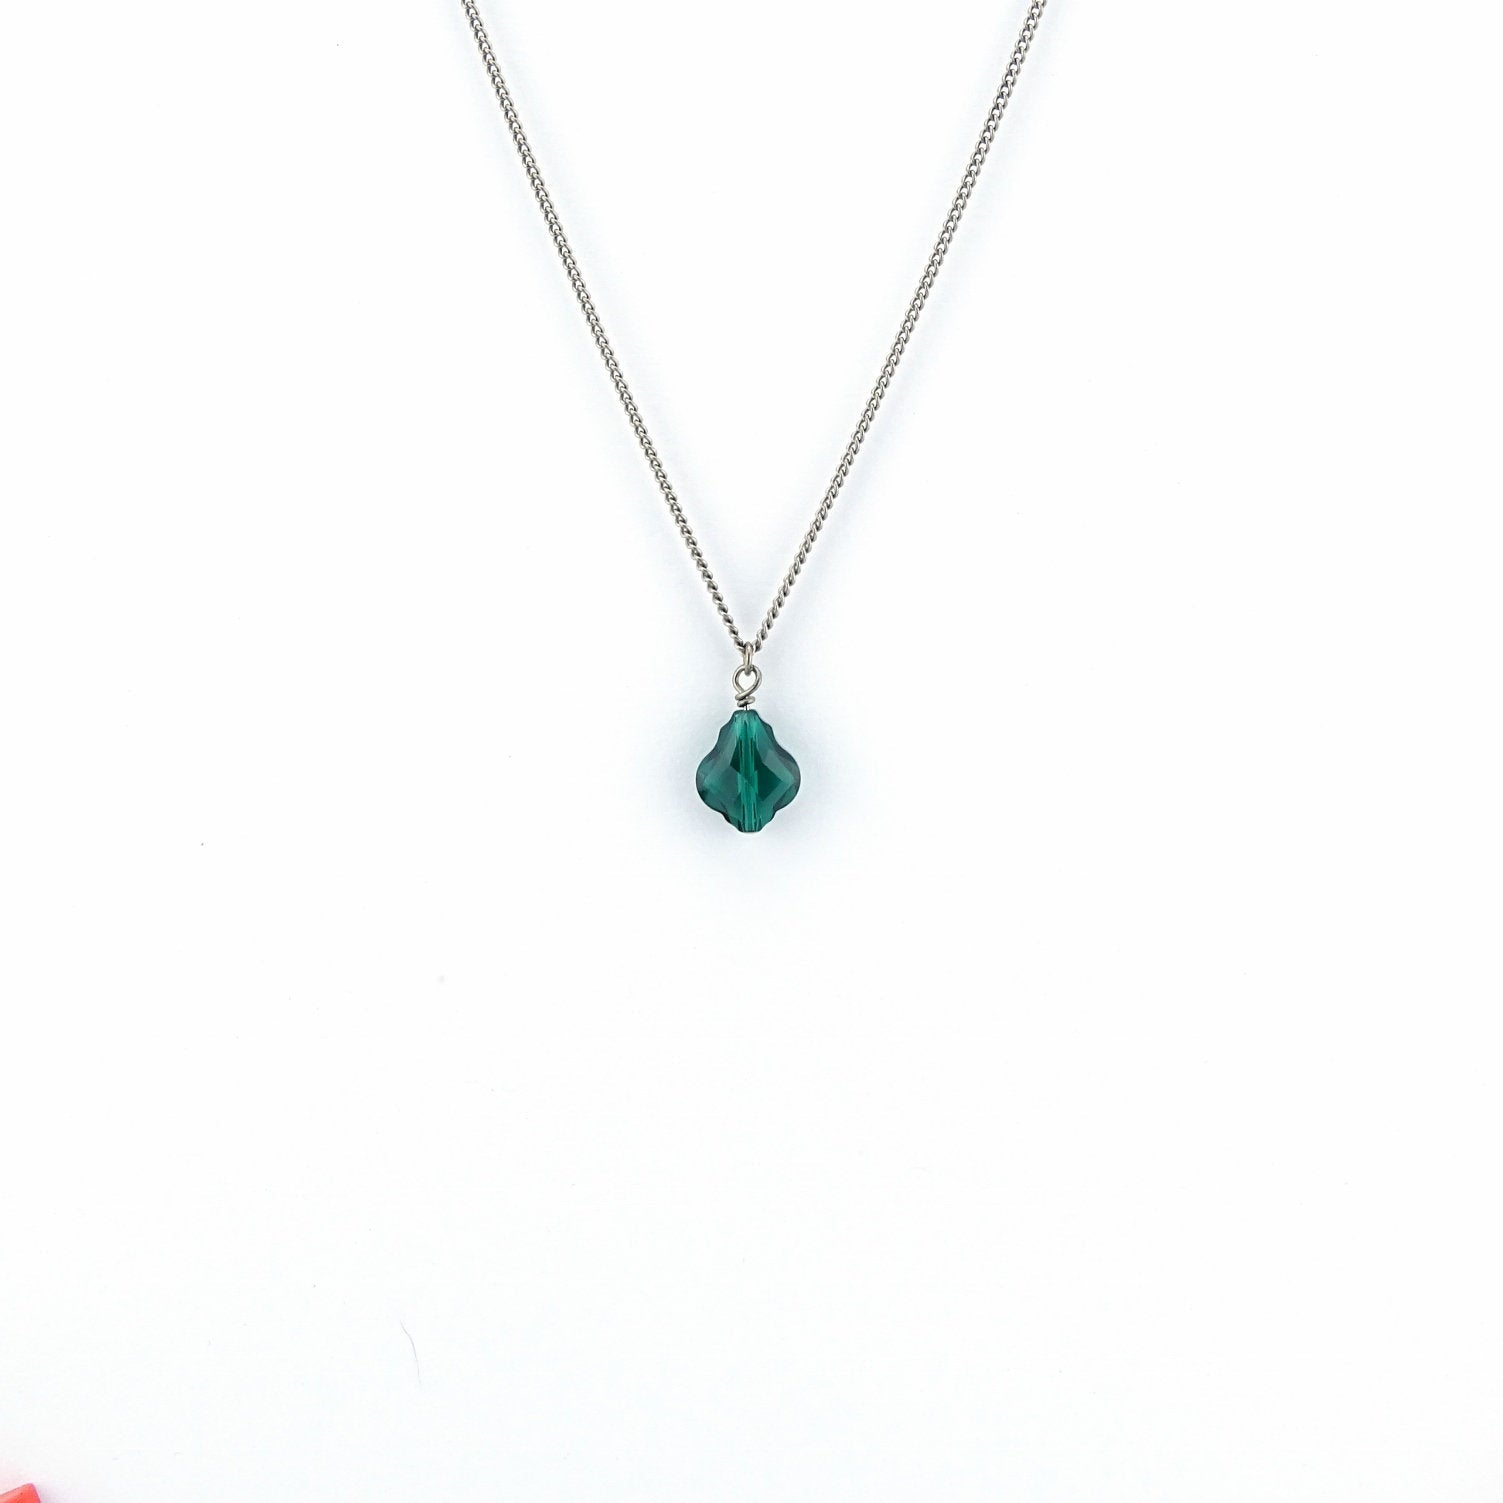 Emerald Green Baroque Crystal Titanium Necklace, Nickel Free Necklace For Sensitive Skin, Swarovski Crystal Pure Titanium Hypoallergenic